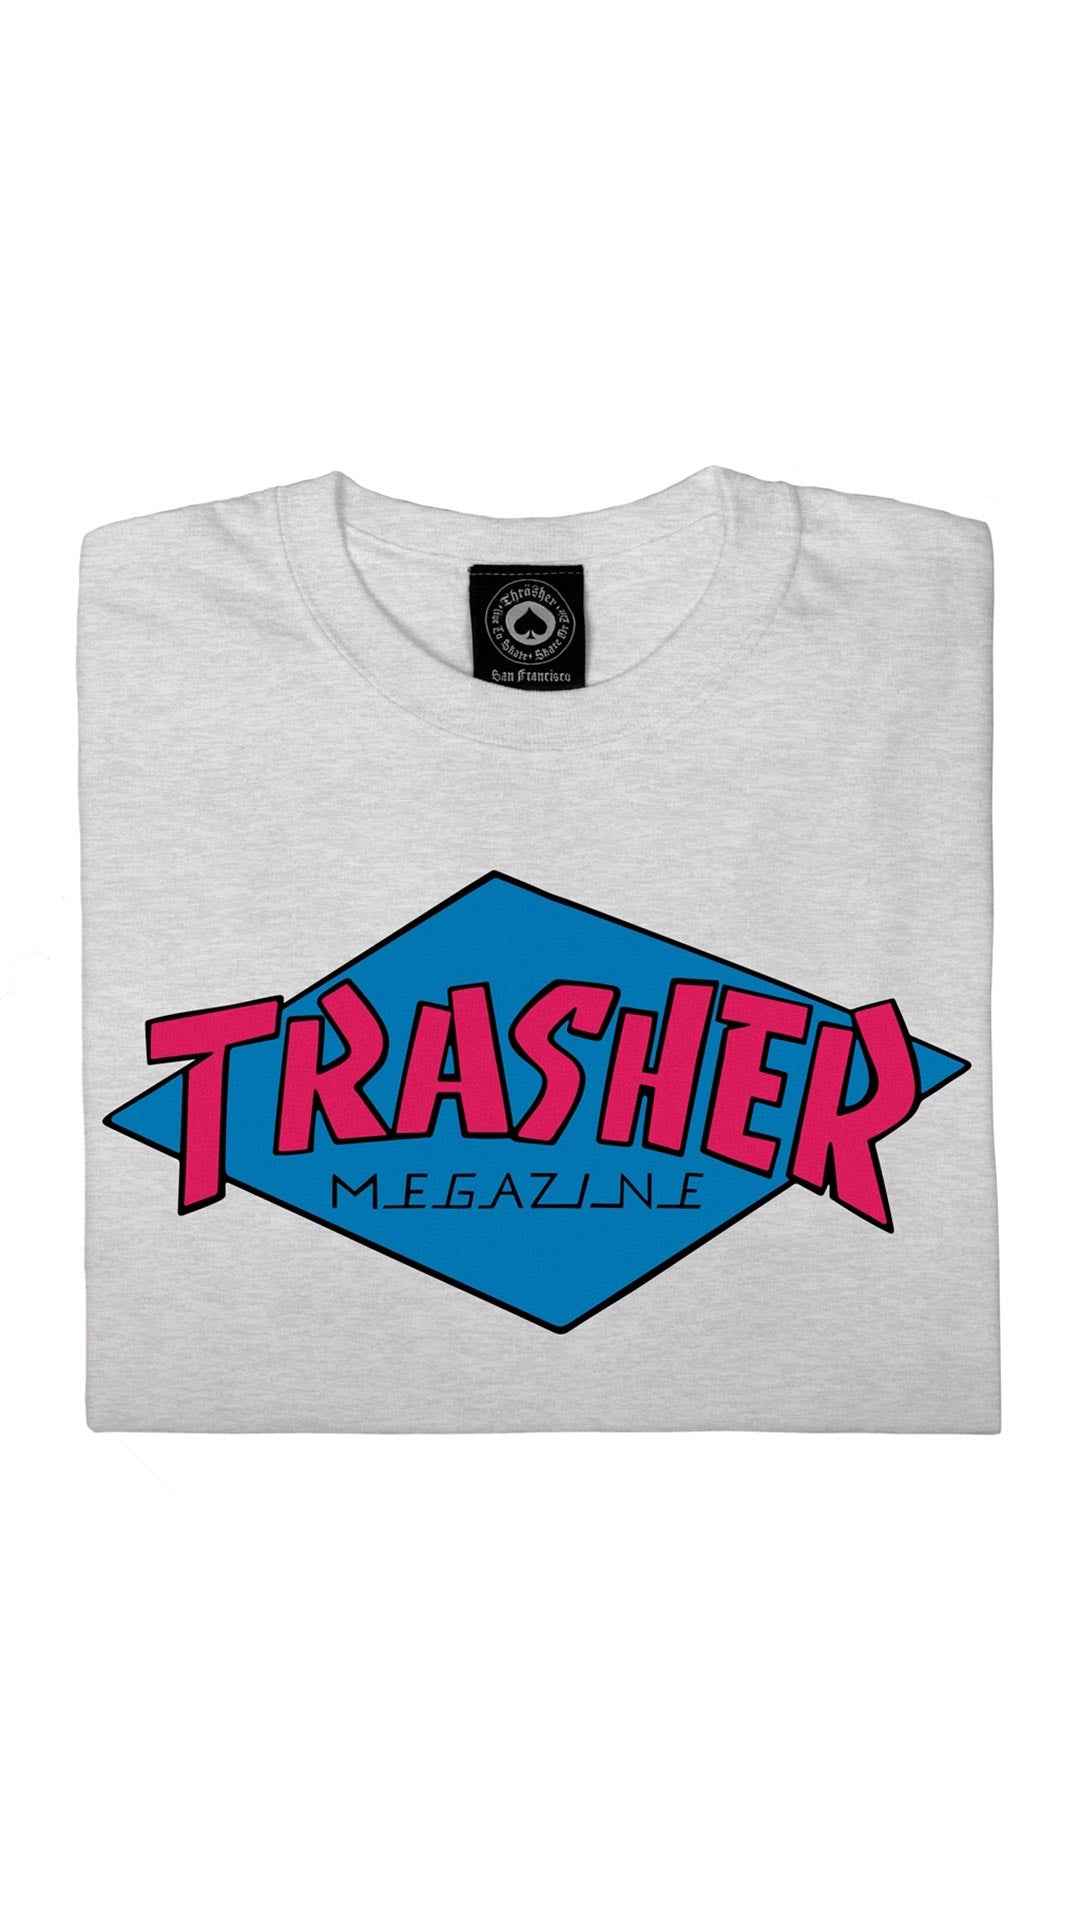 Parra x Thrasher Trasher Tee - Camiseta Ropa Thrasher Magazine 